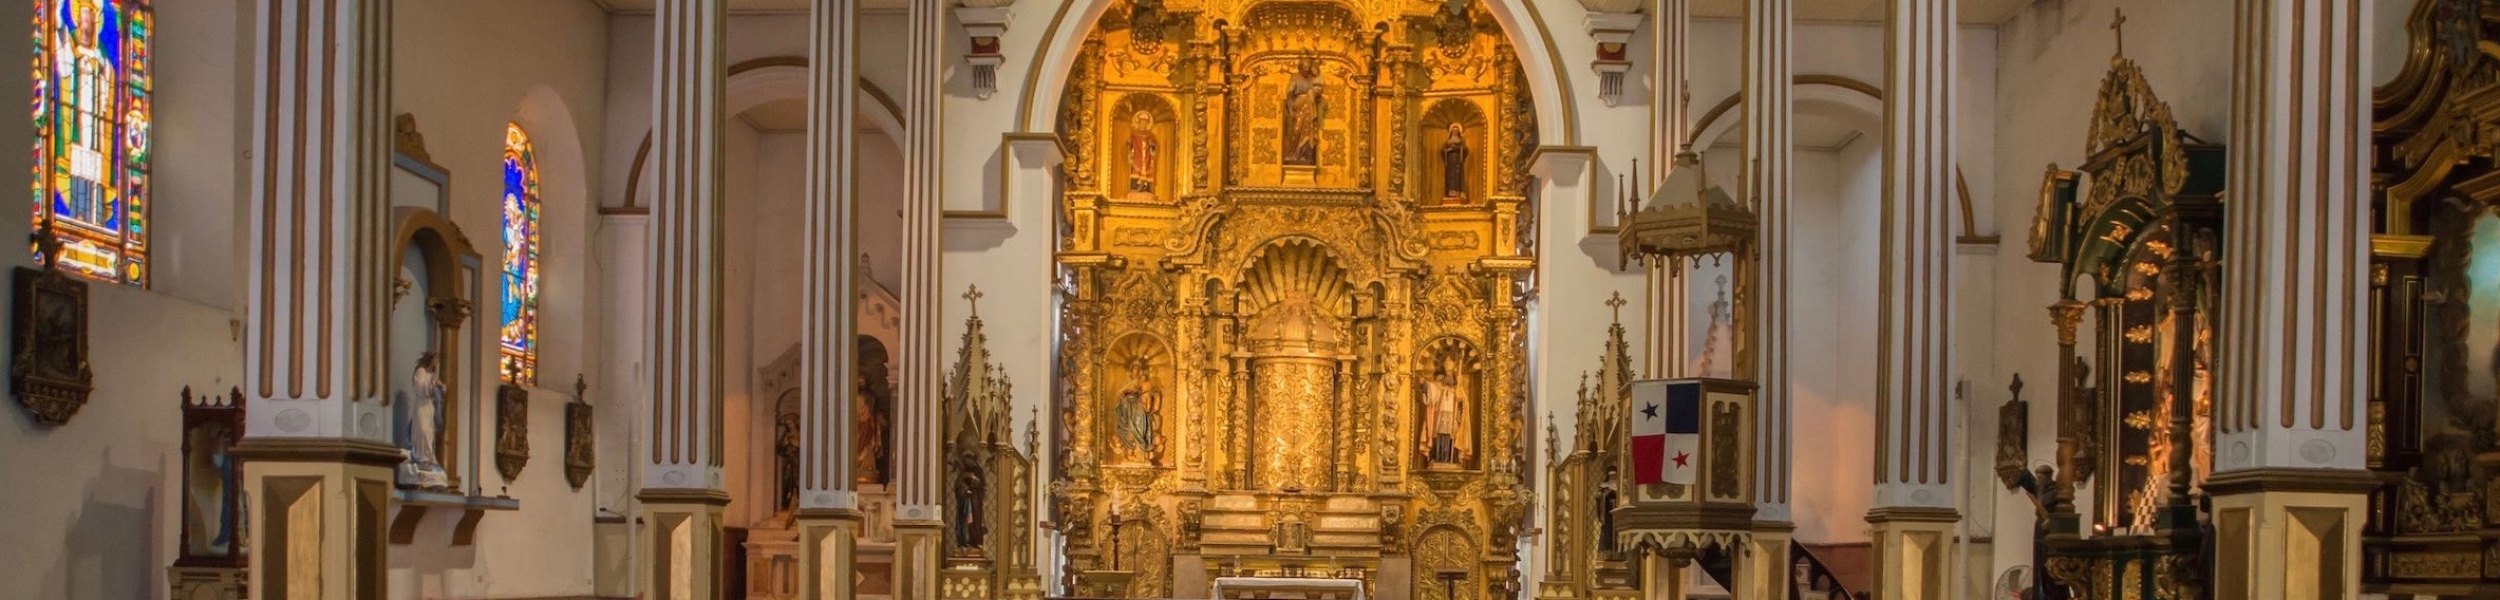 arco-chato-iglesia-church-casco-viejo-panama